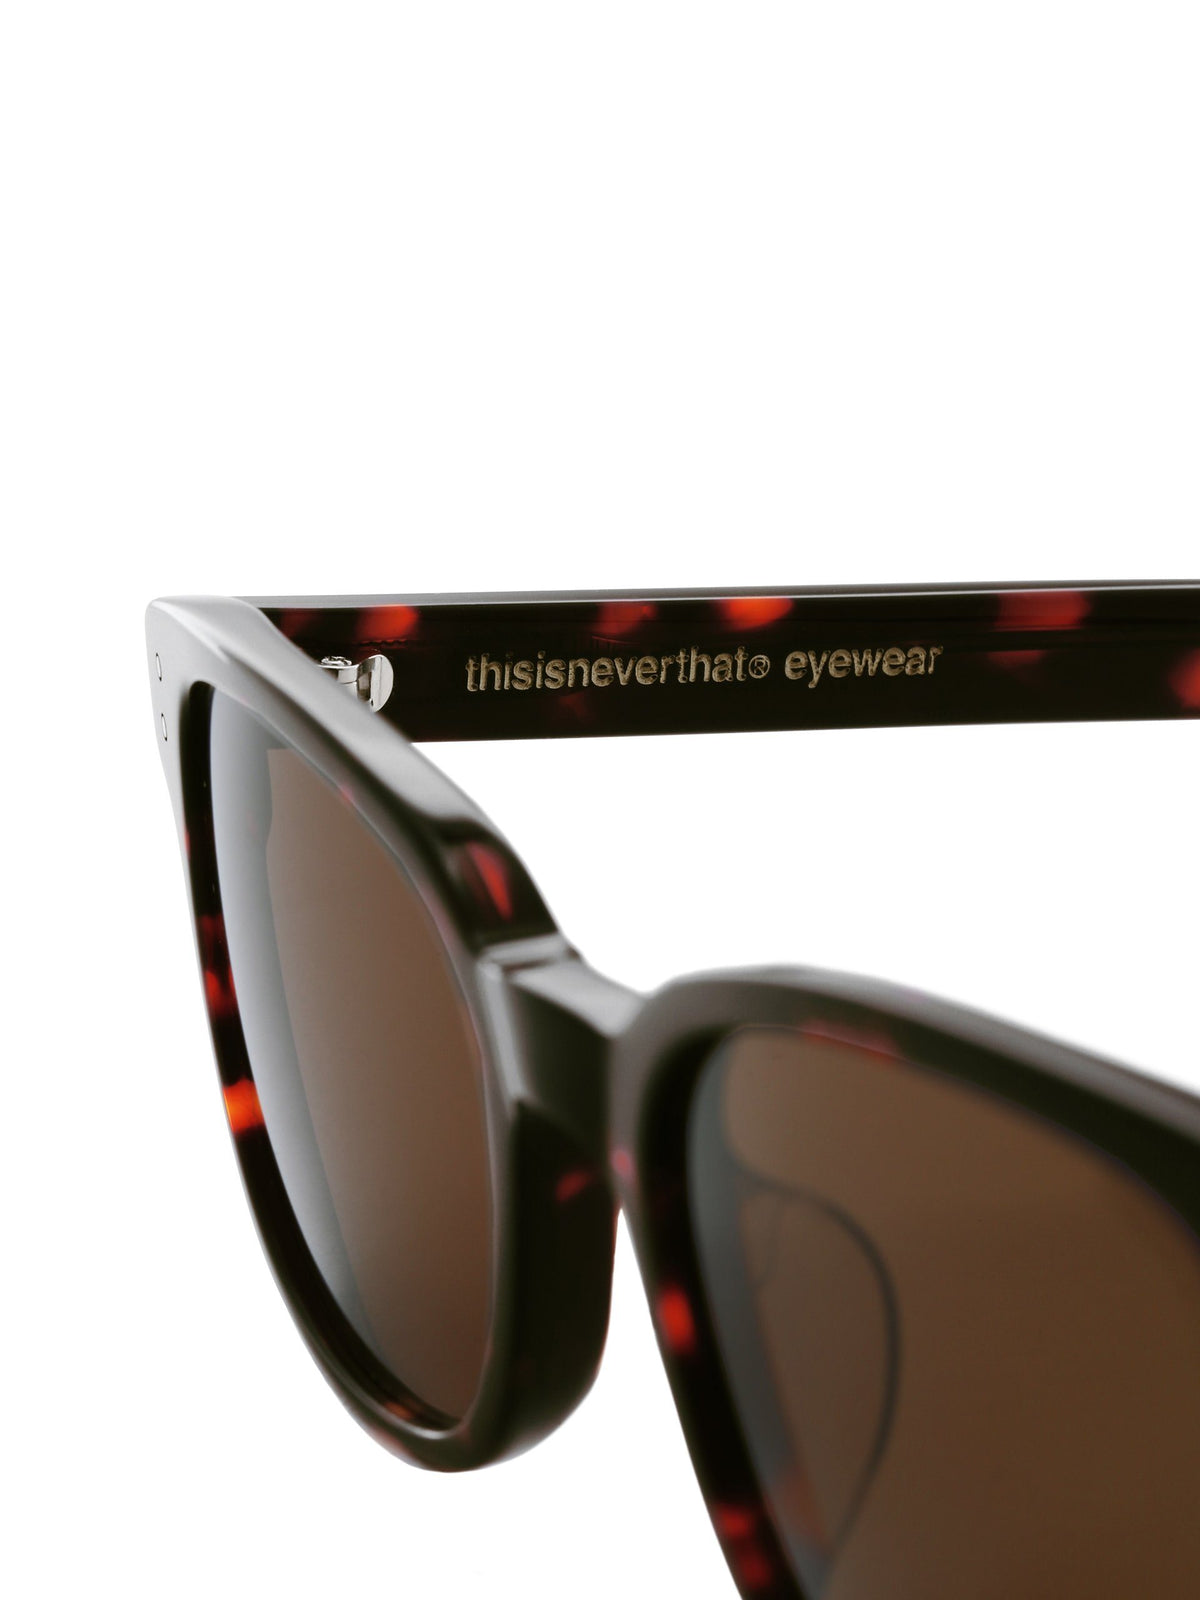 Foss Sunglasses Accessory 